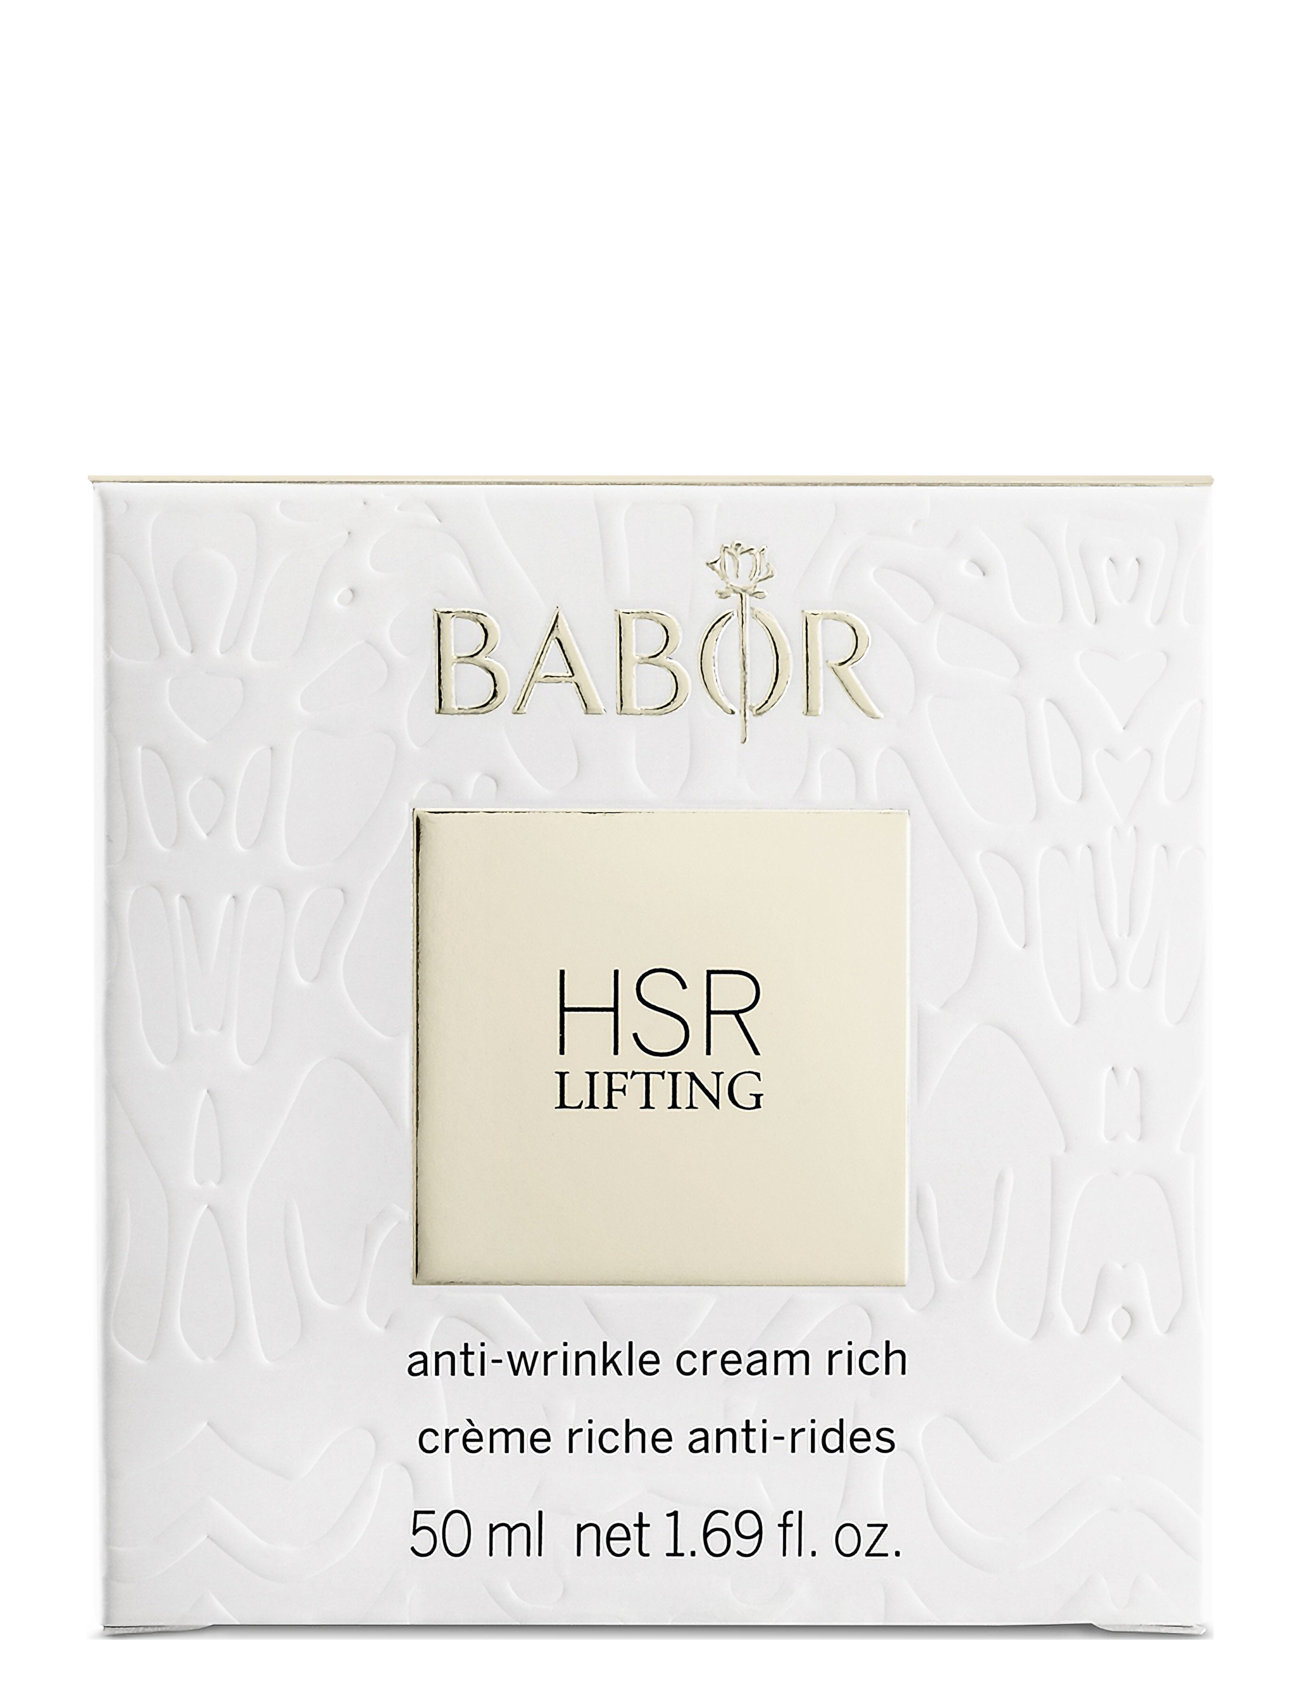 Babor Hsr Lifting Cream Rich Hudpleie Nude Babor